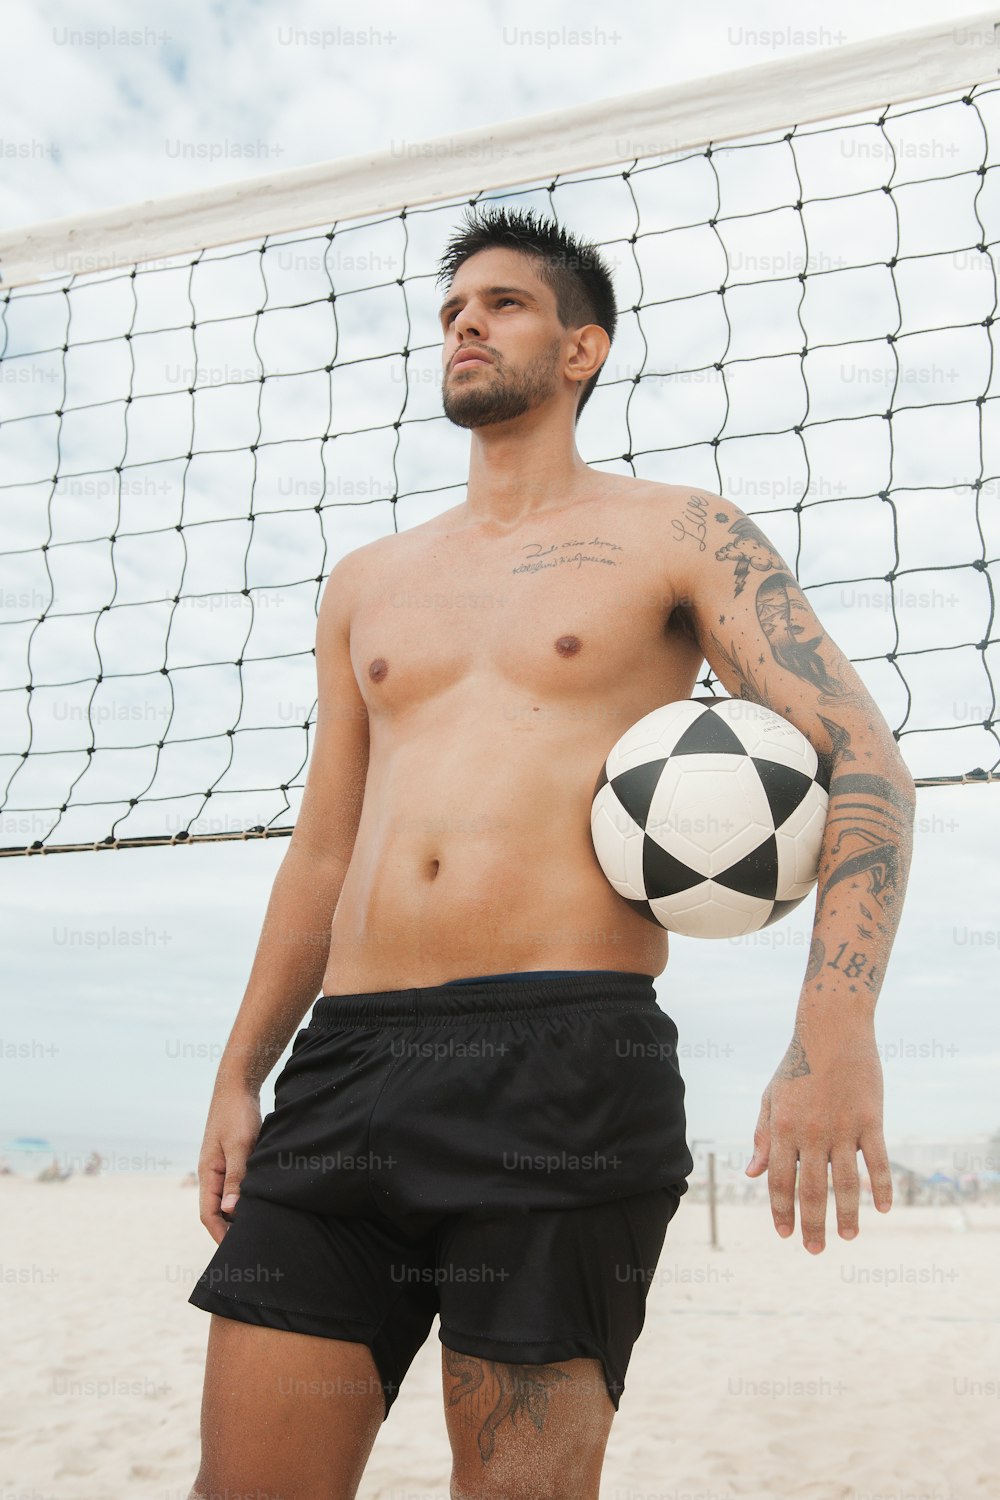 a shirtless man holding a soccer ball on a beach